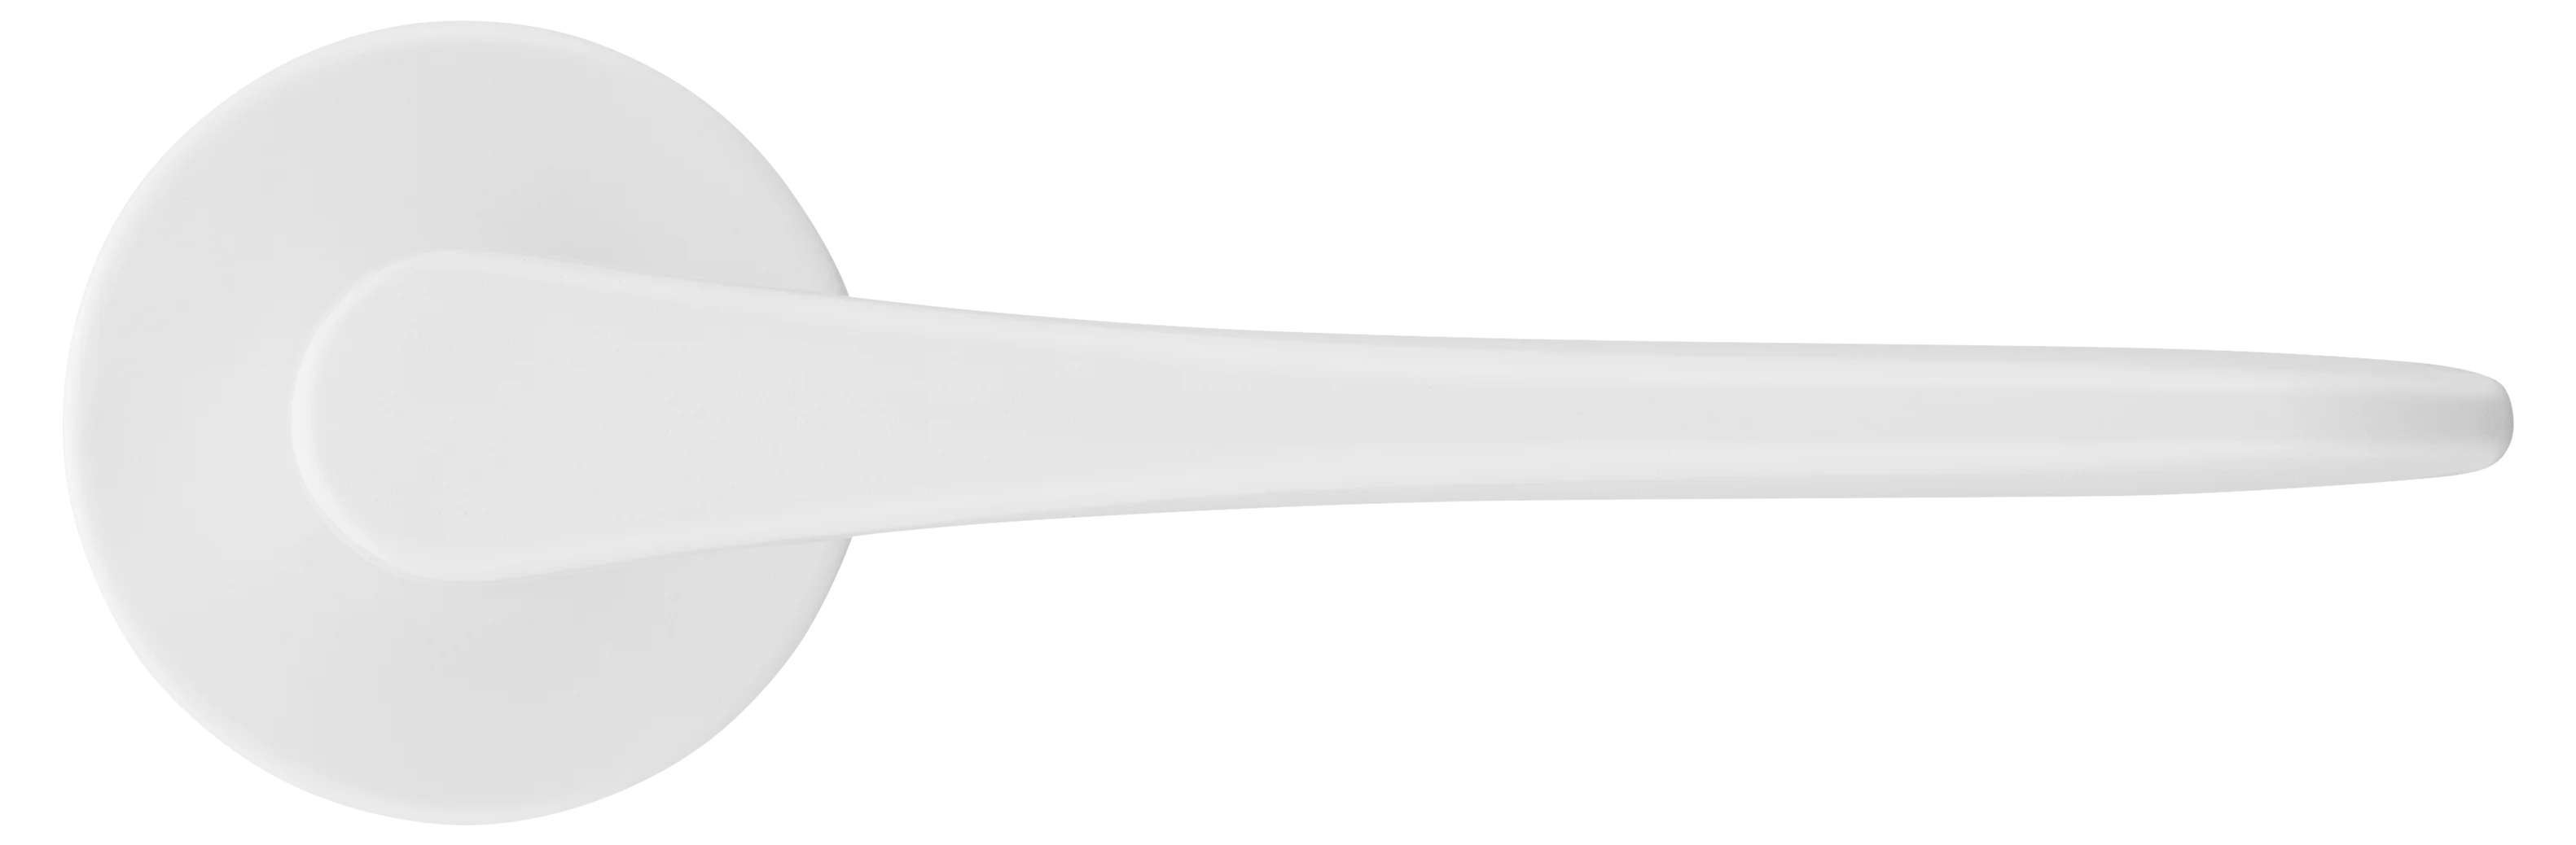 AULA R5 BIA, ручка дверная на розетке 7мм, цвет -  белый фото купить в Южно-Сахалинске